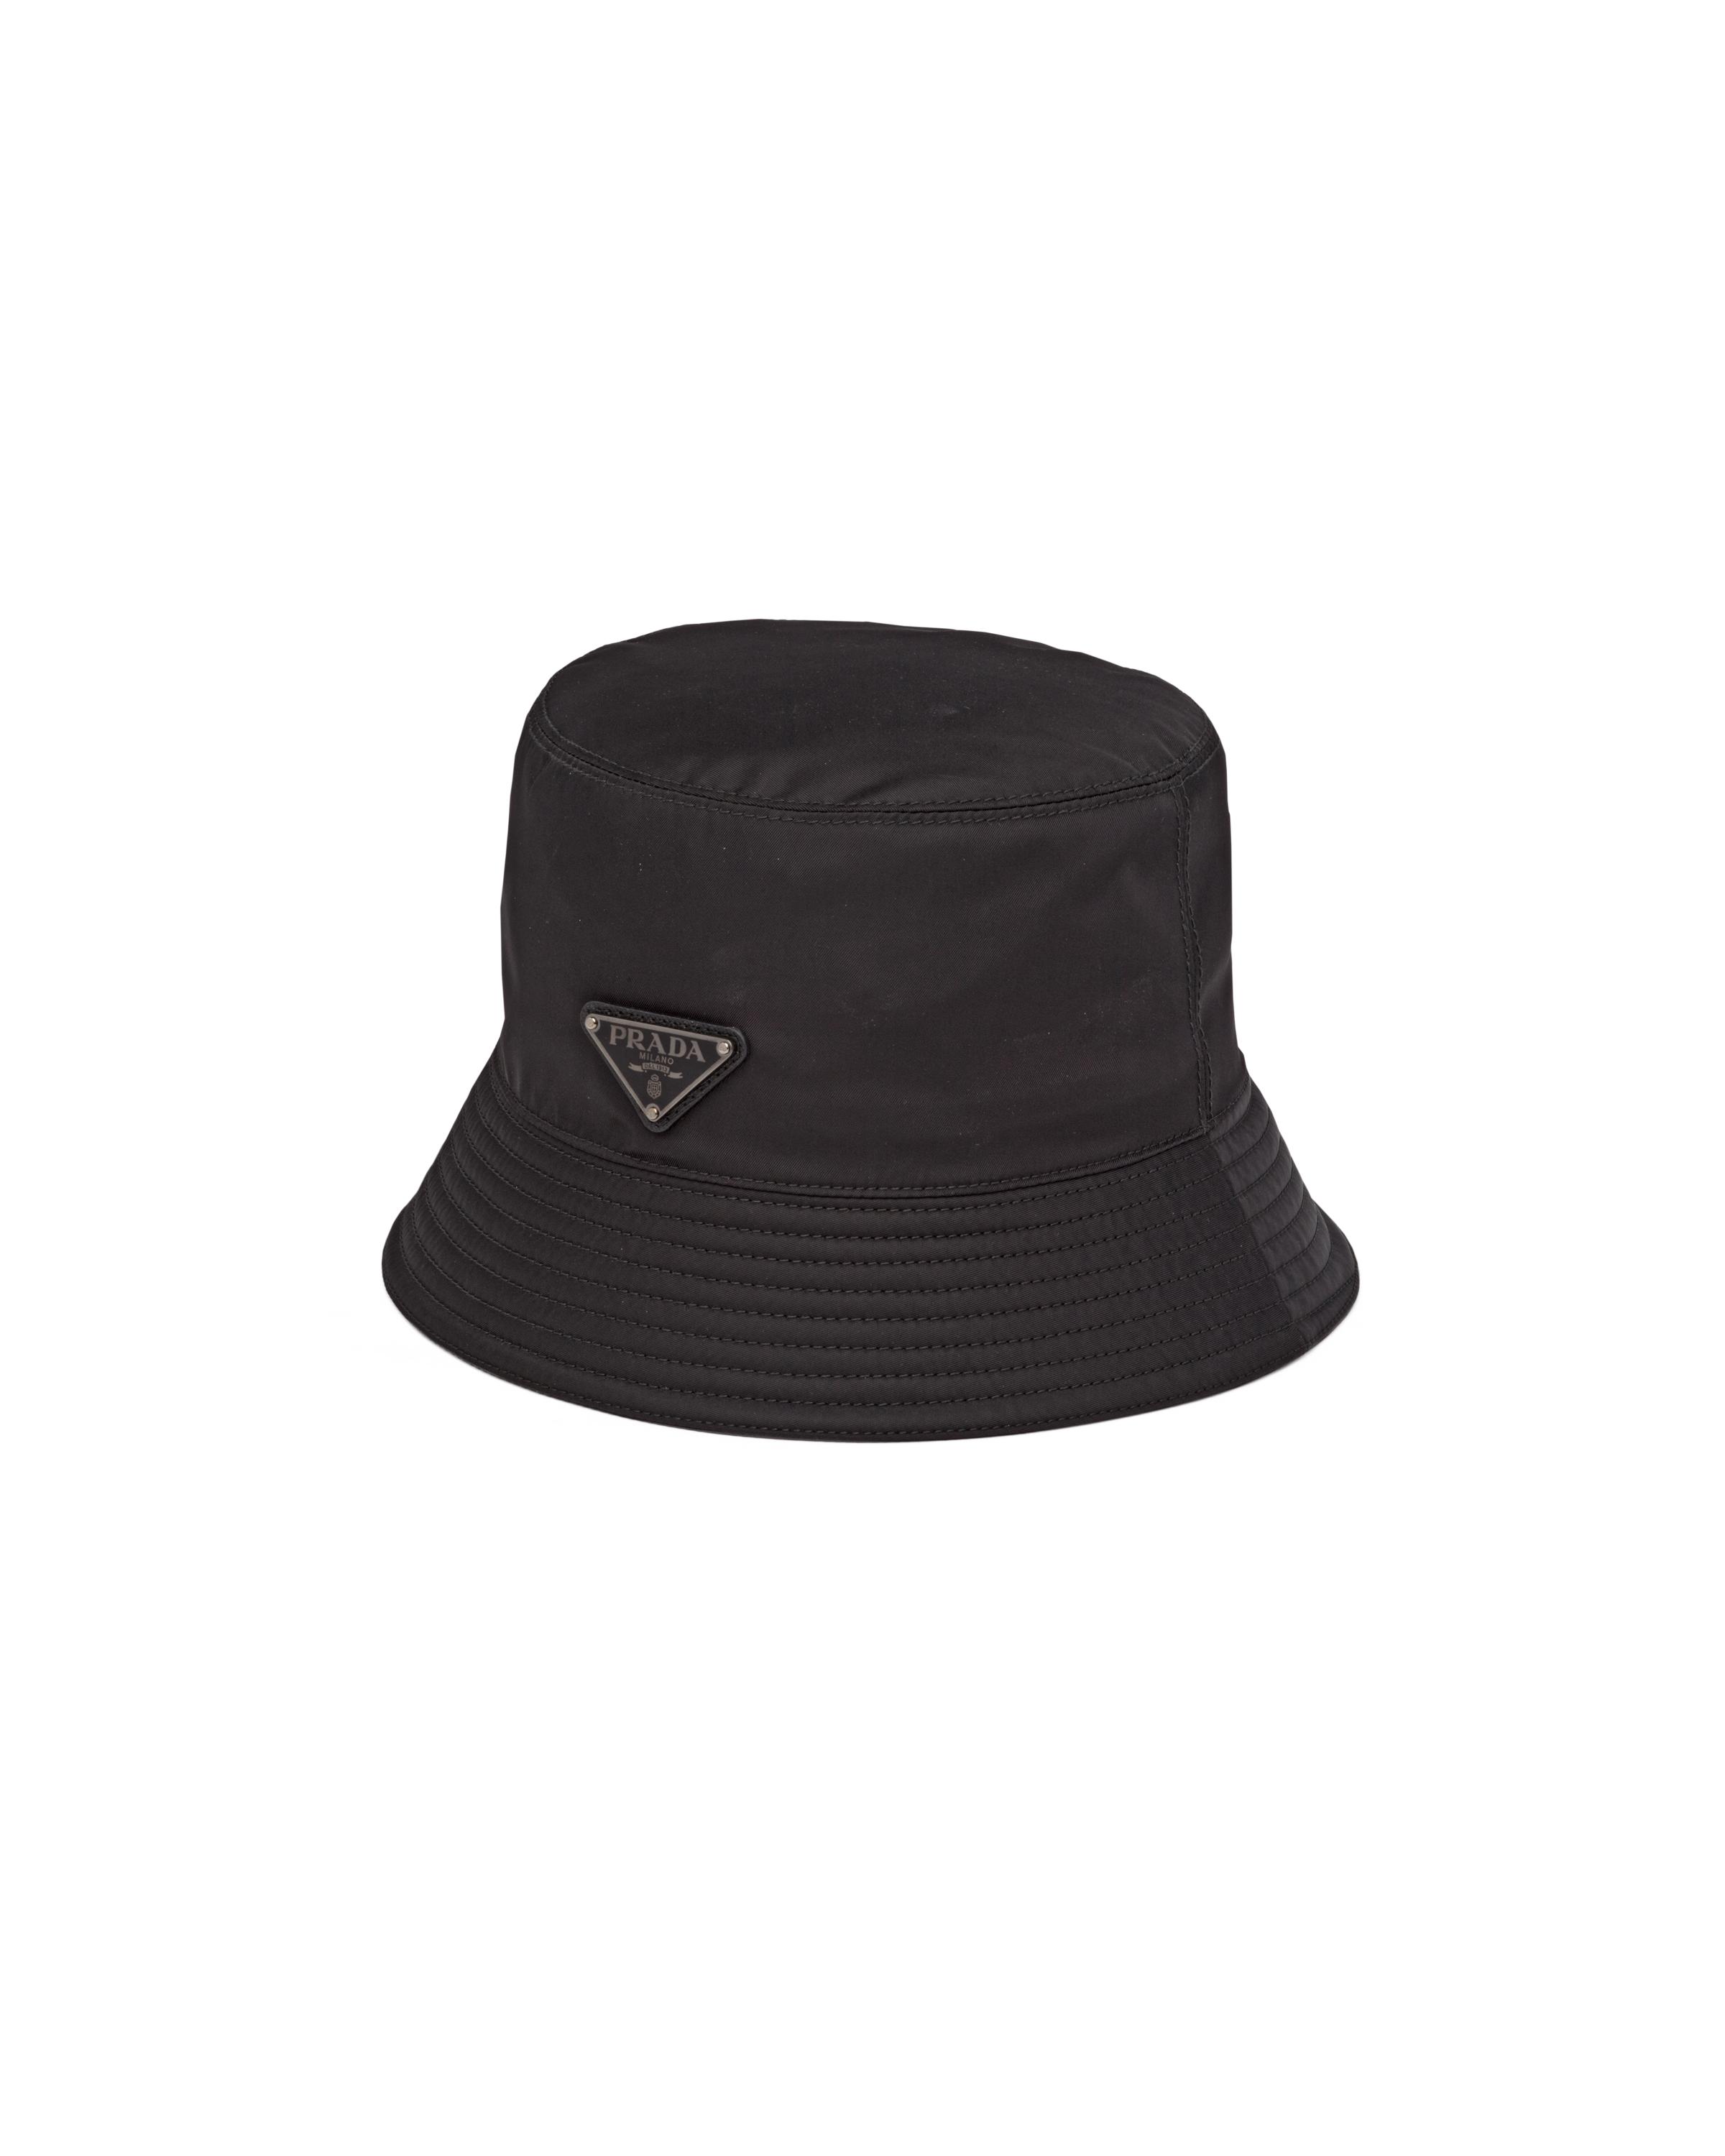 Prada Synthetic Re-nylon Bucket Hat in Black - Lyst